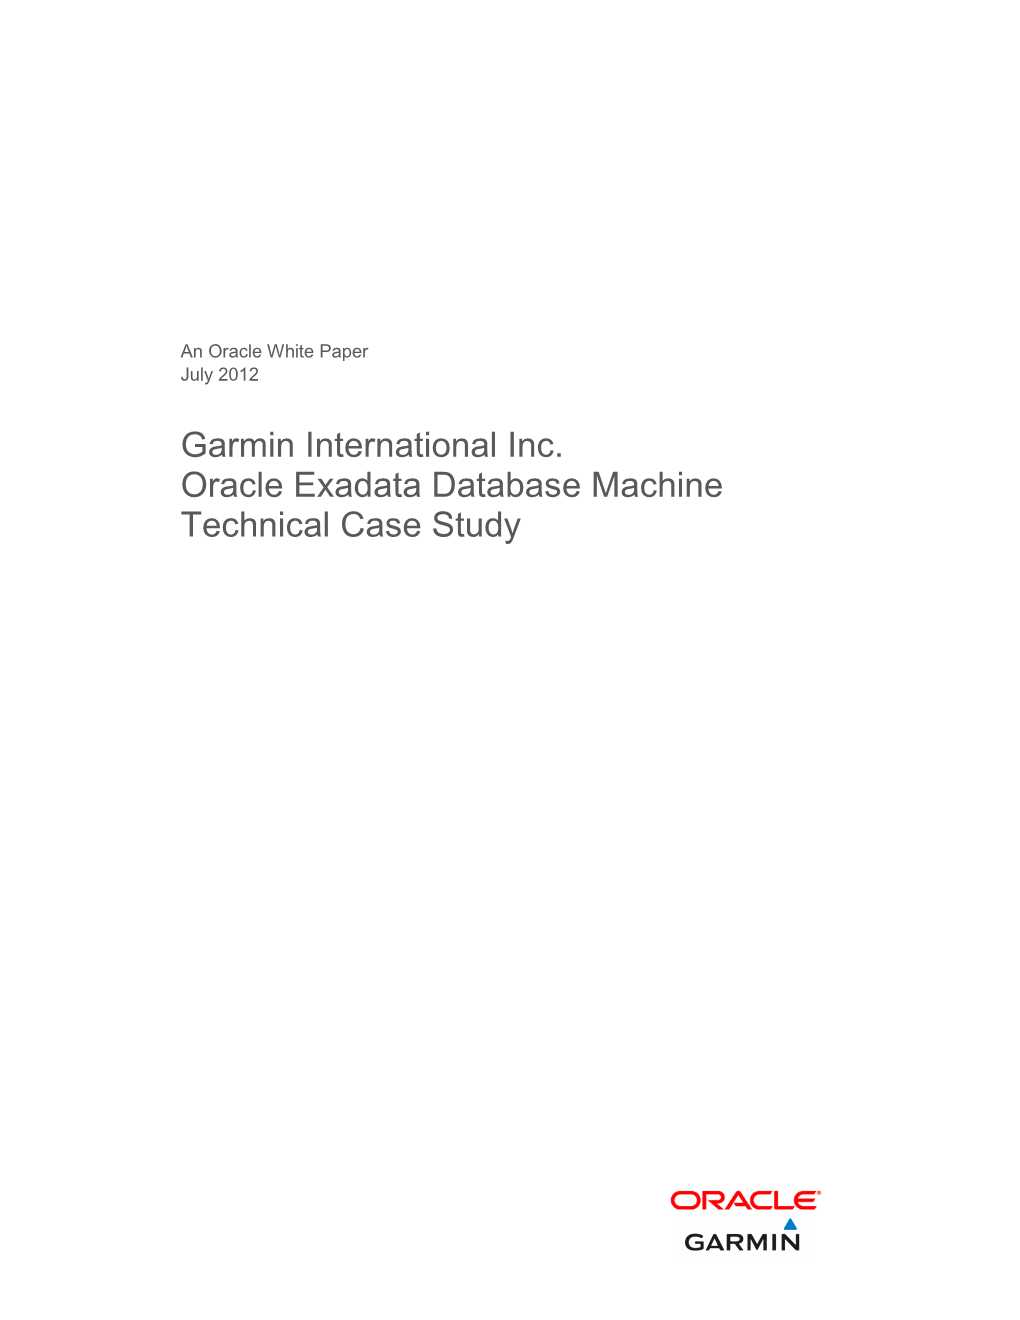 Garmin International Inc. Oracle Exadata Database Machine Technical Case Study